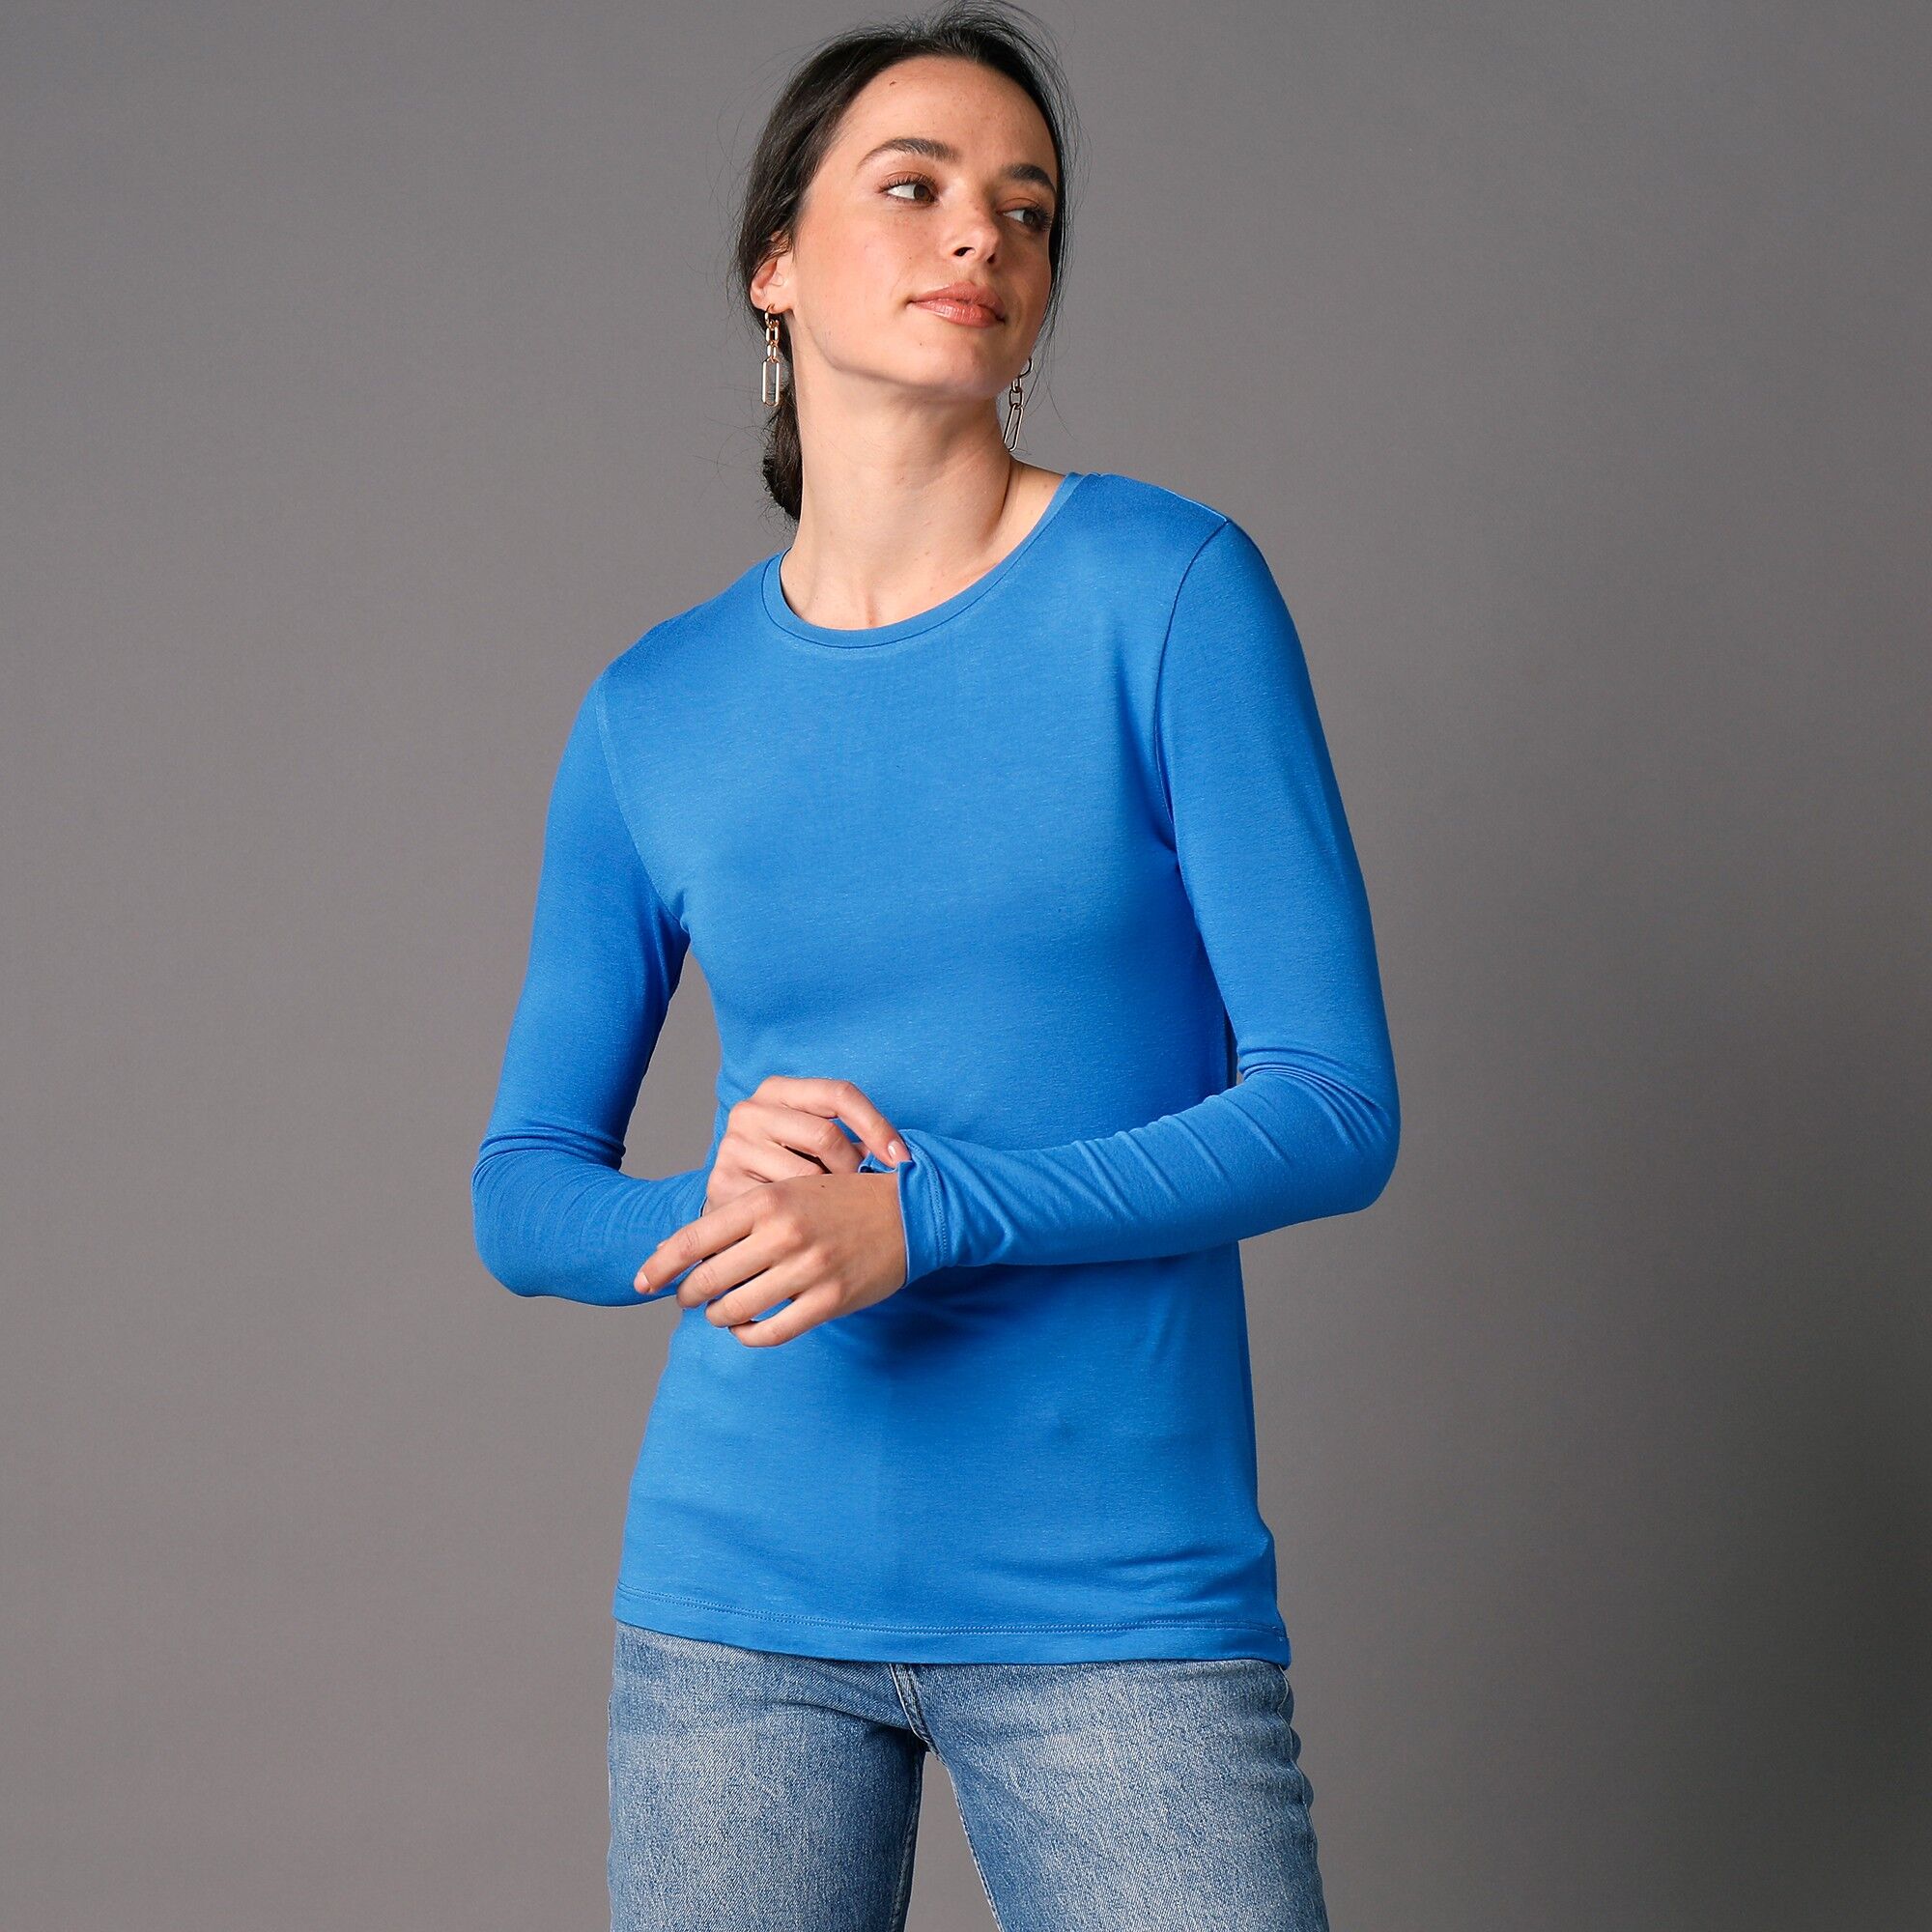 Colors&Co Tee-shirt uni col rond viscose stretch - 50 - Bleu - Colors&co  - Vert - Size: 50